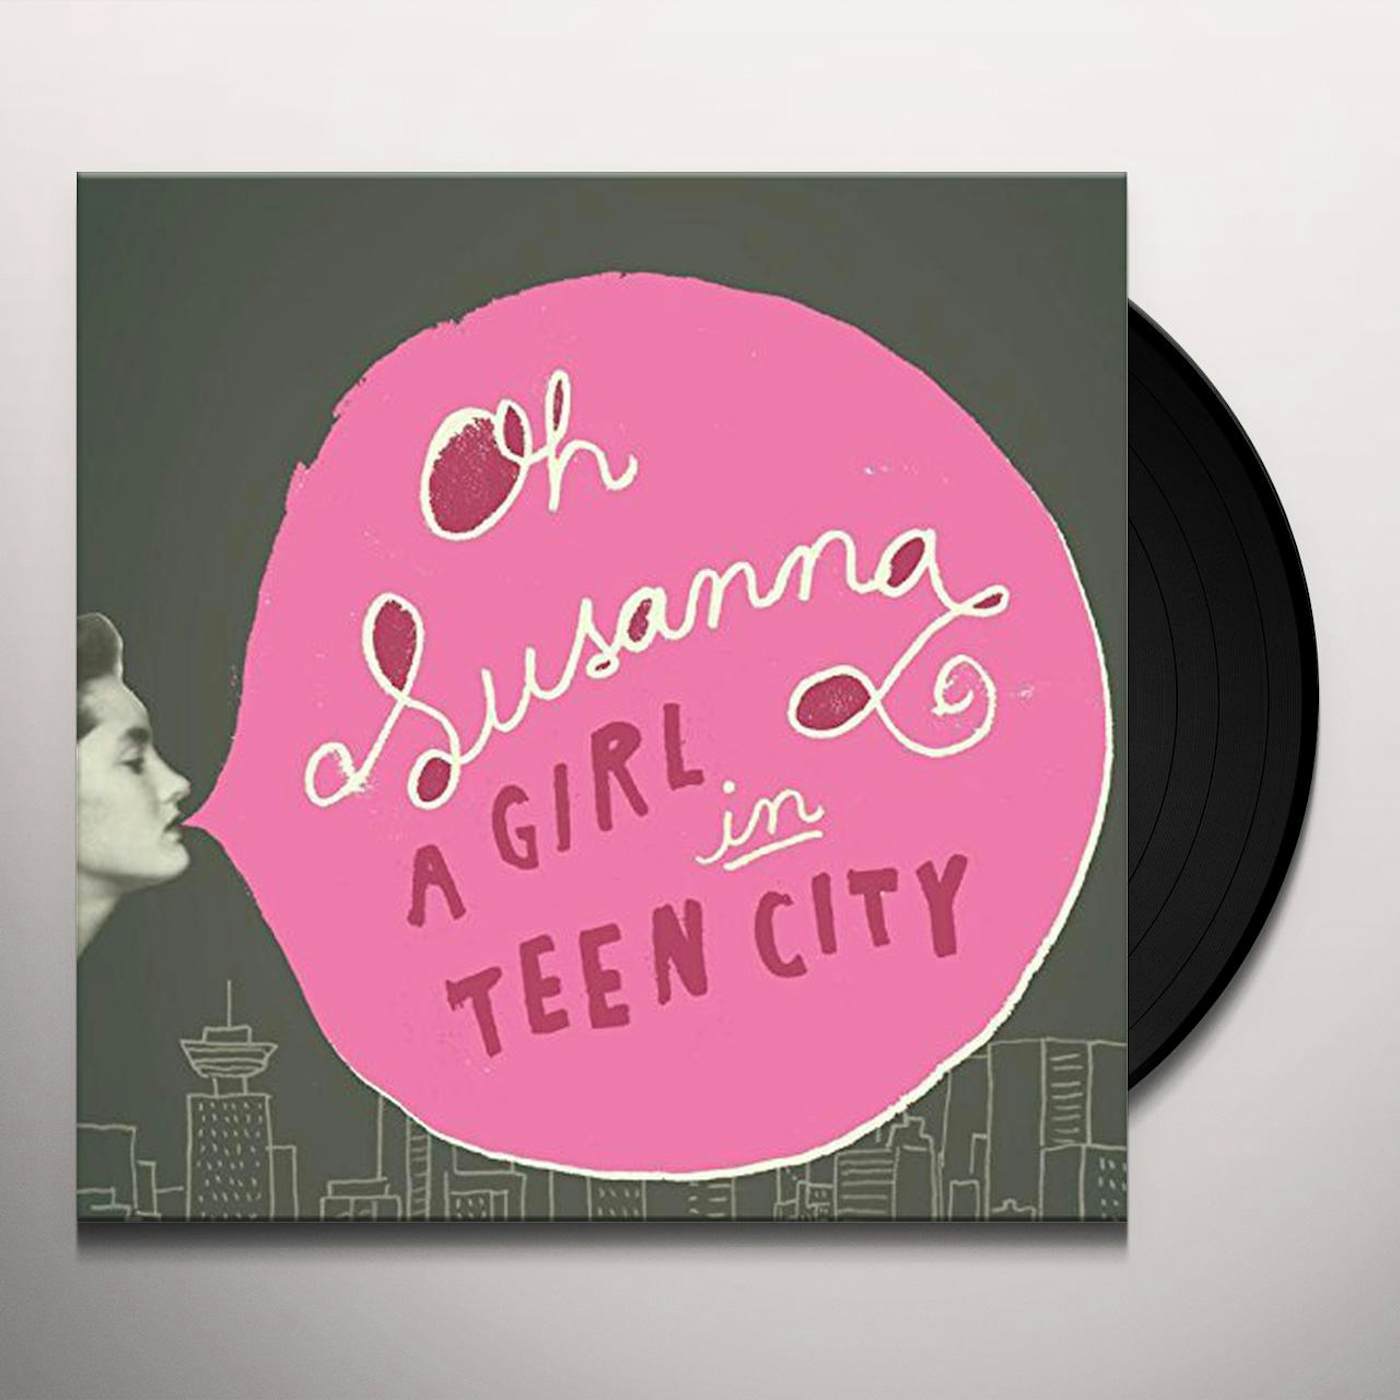 OH SUSANNA GIRL IN TEEN CITY Vinyl Record